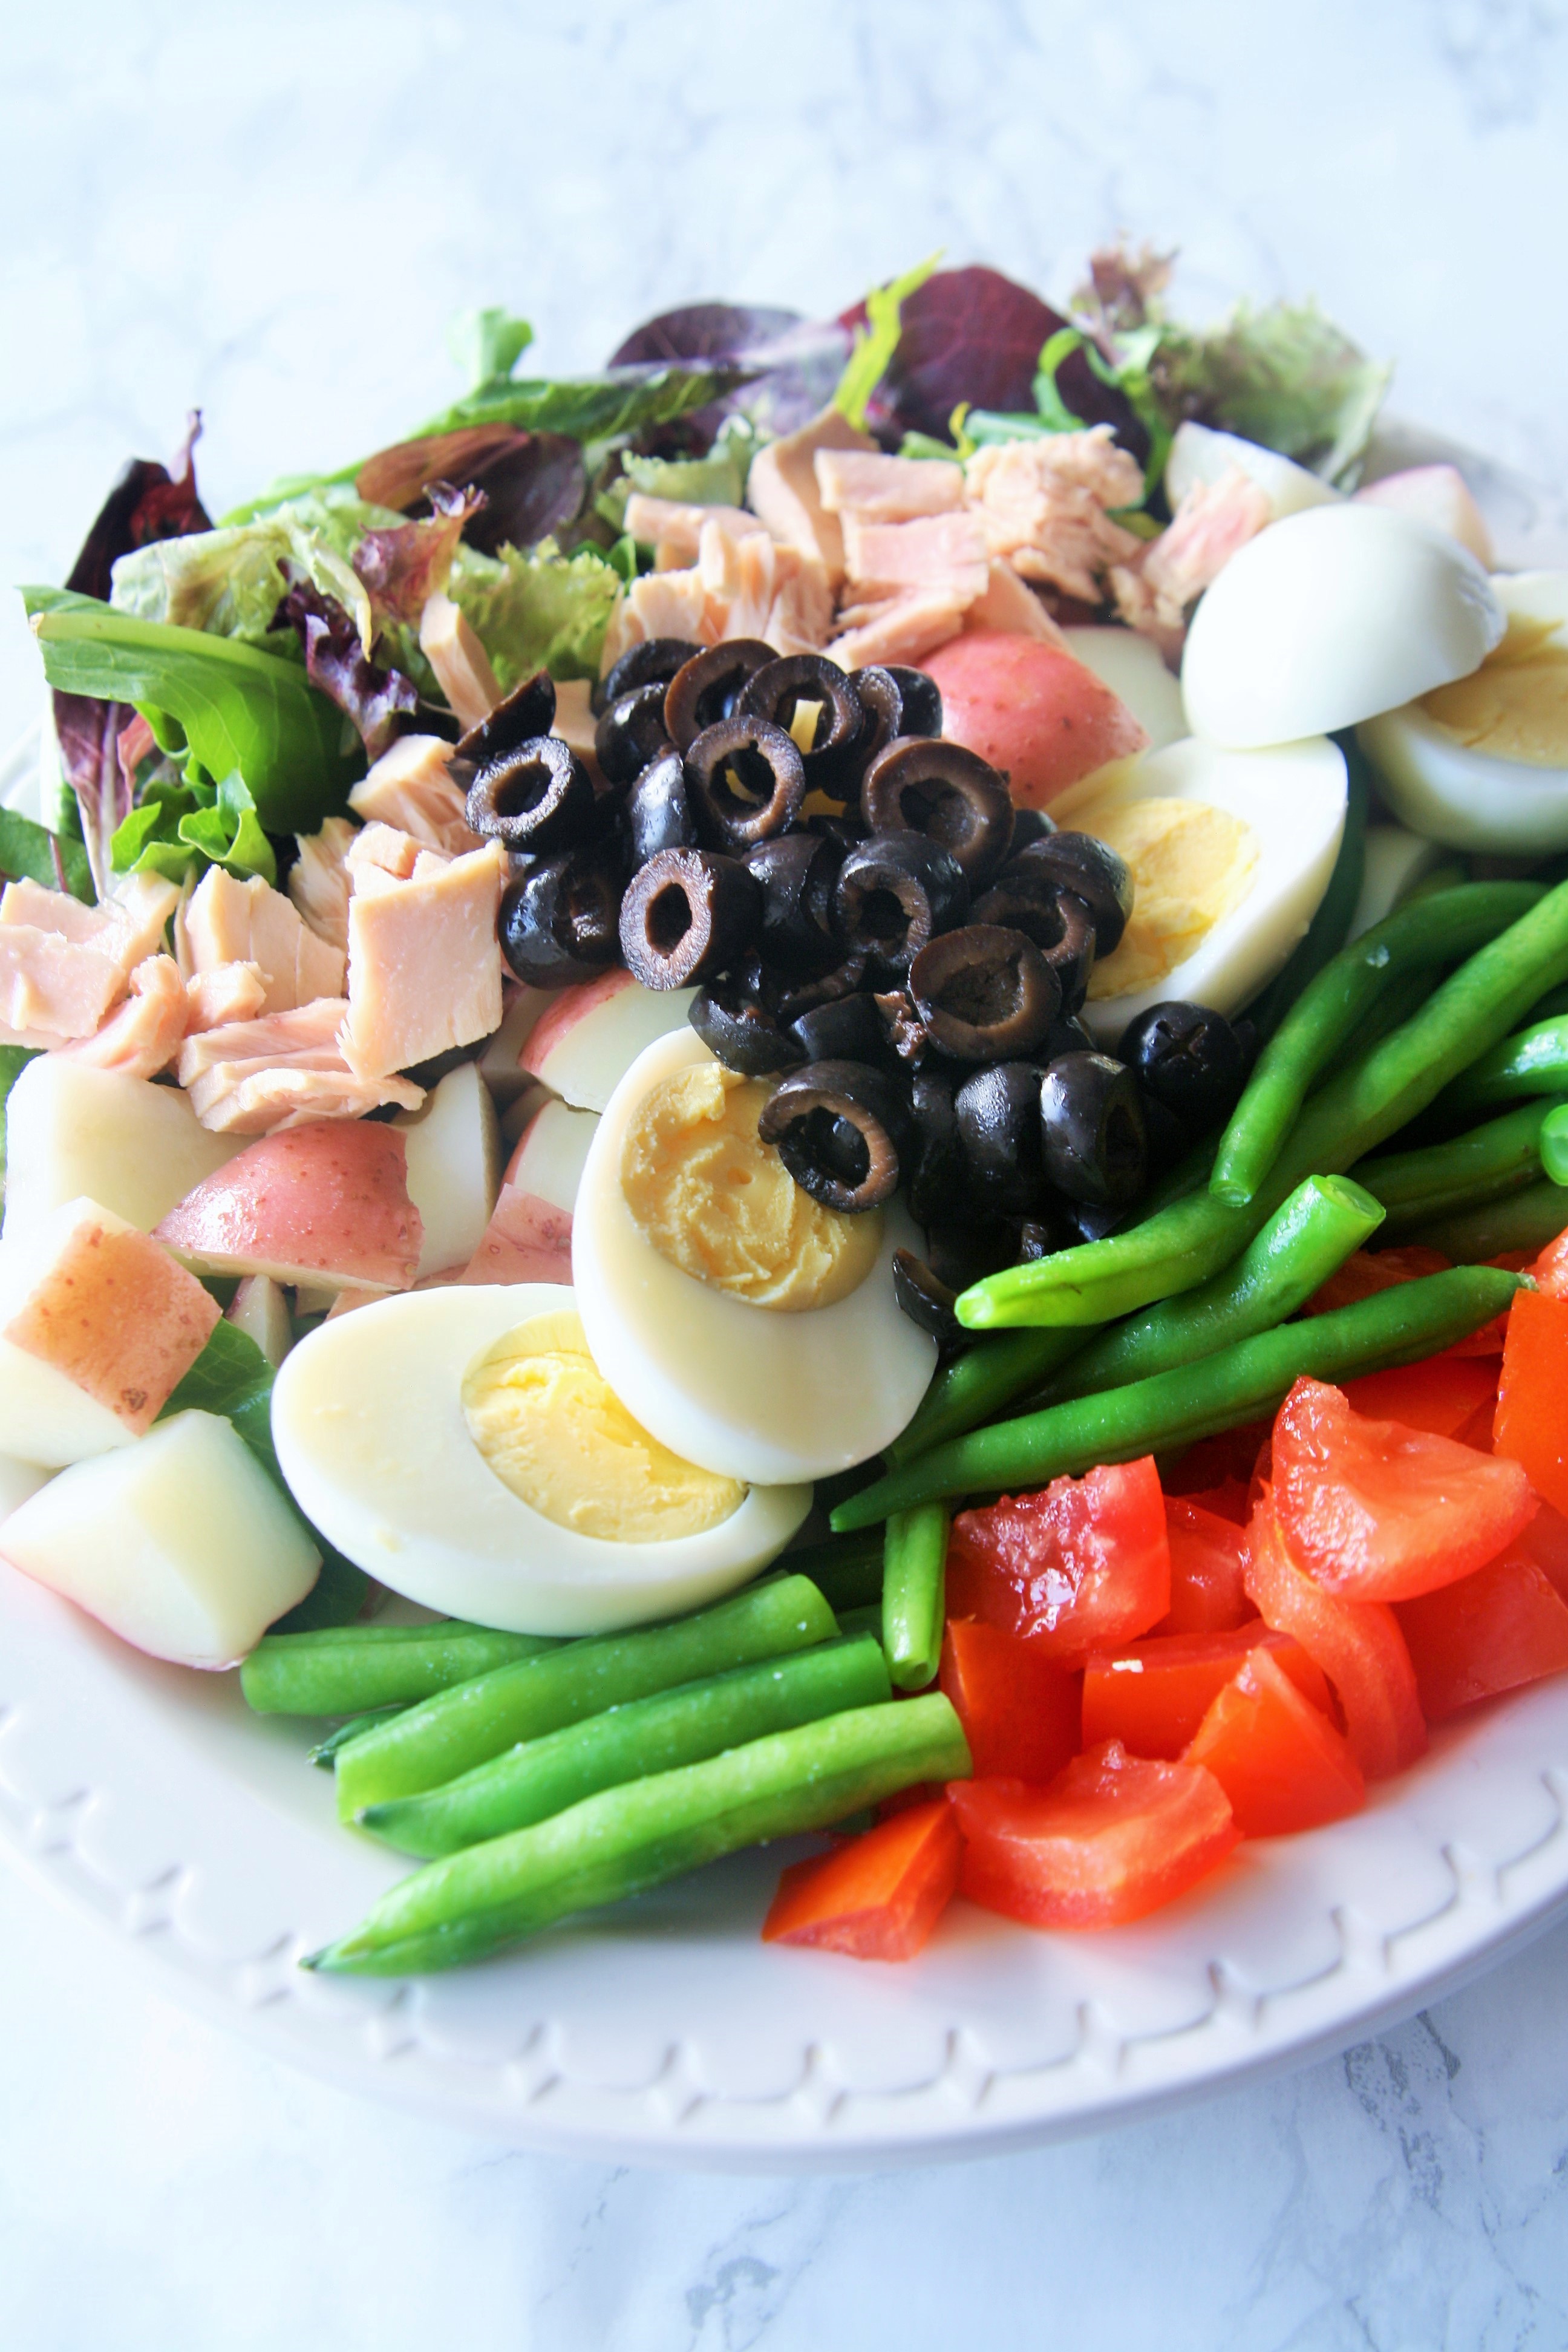 Tuna Nicoise Salad with Black Olive Vinaigrette - The Tasty Bite